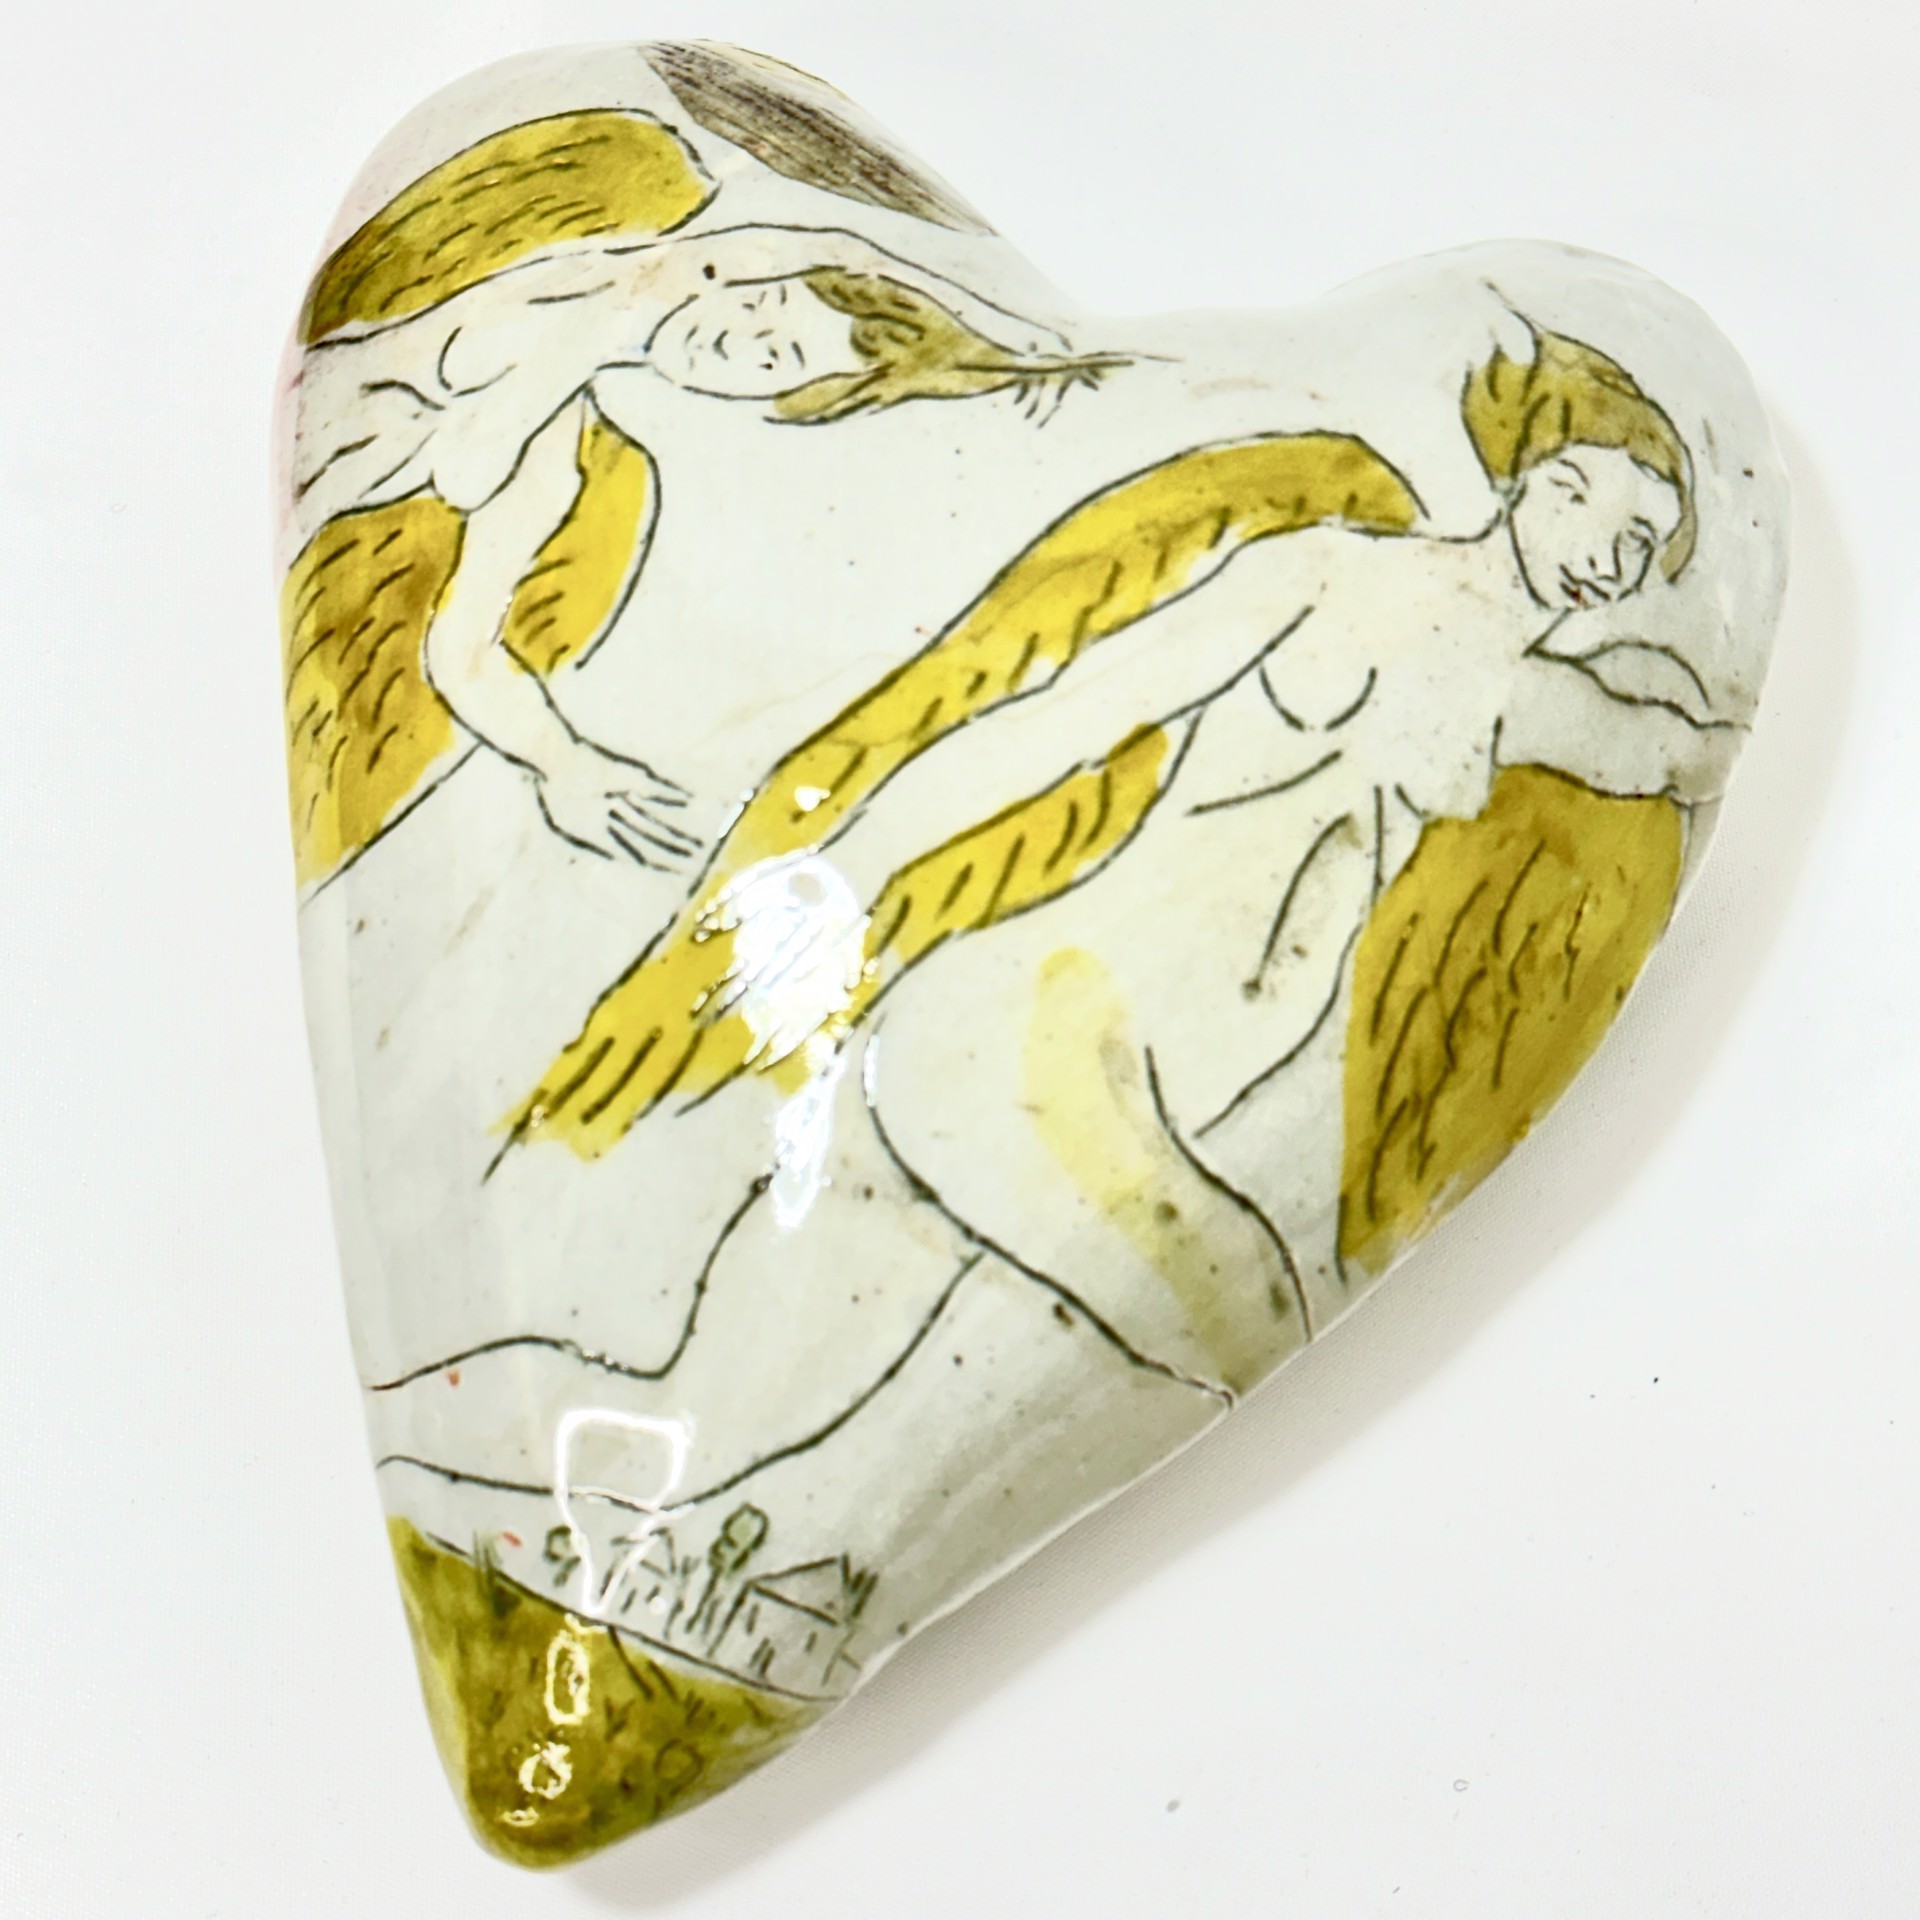 Angel Heart #2 by Julius Forzano